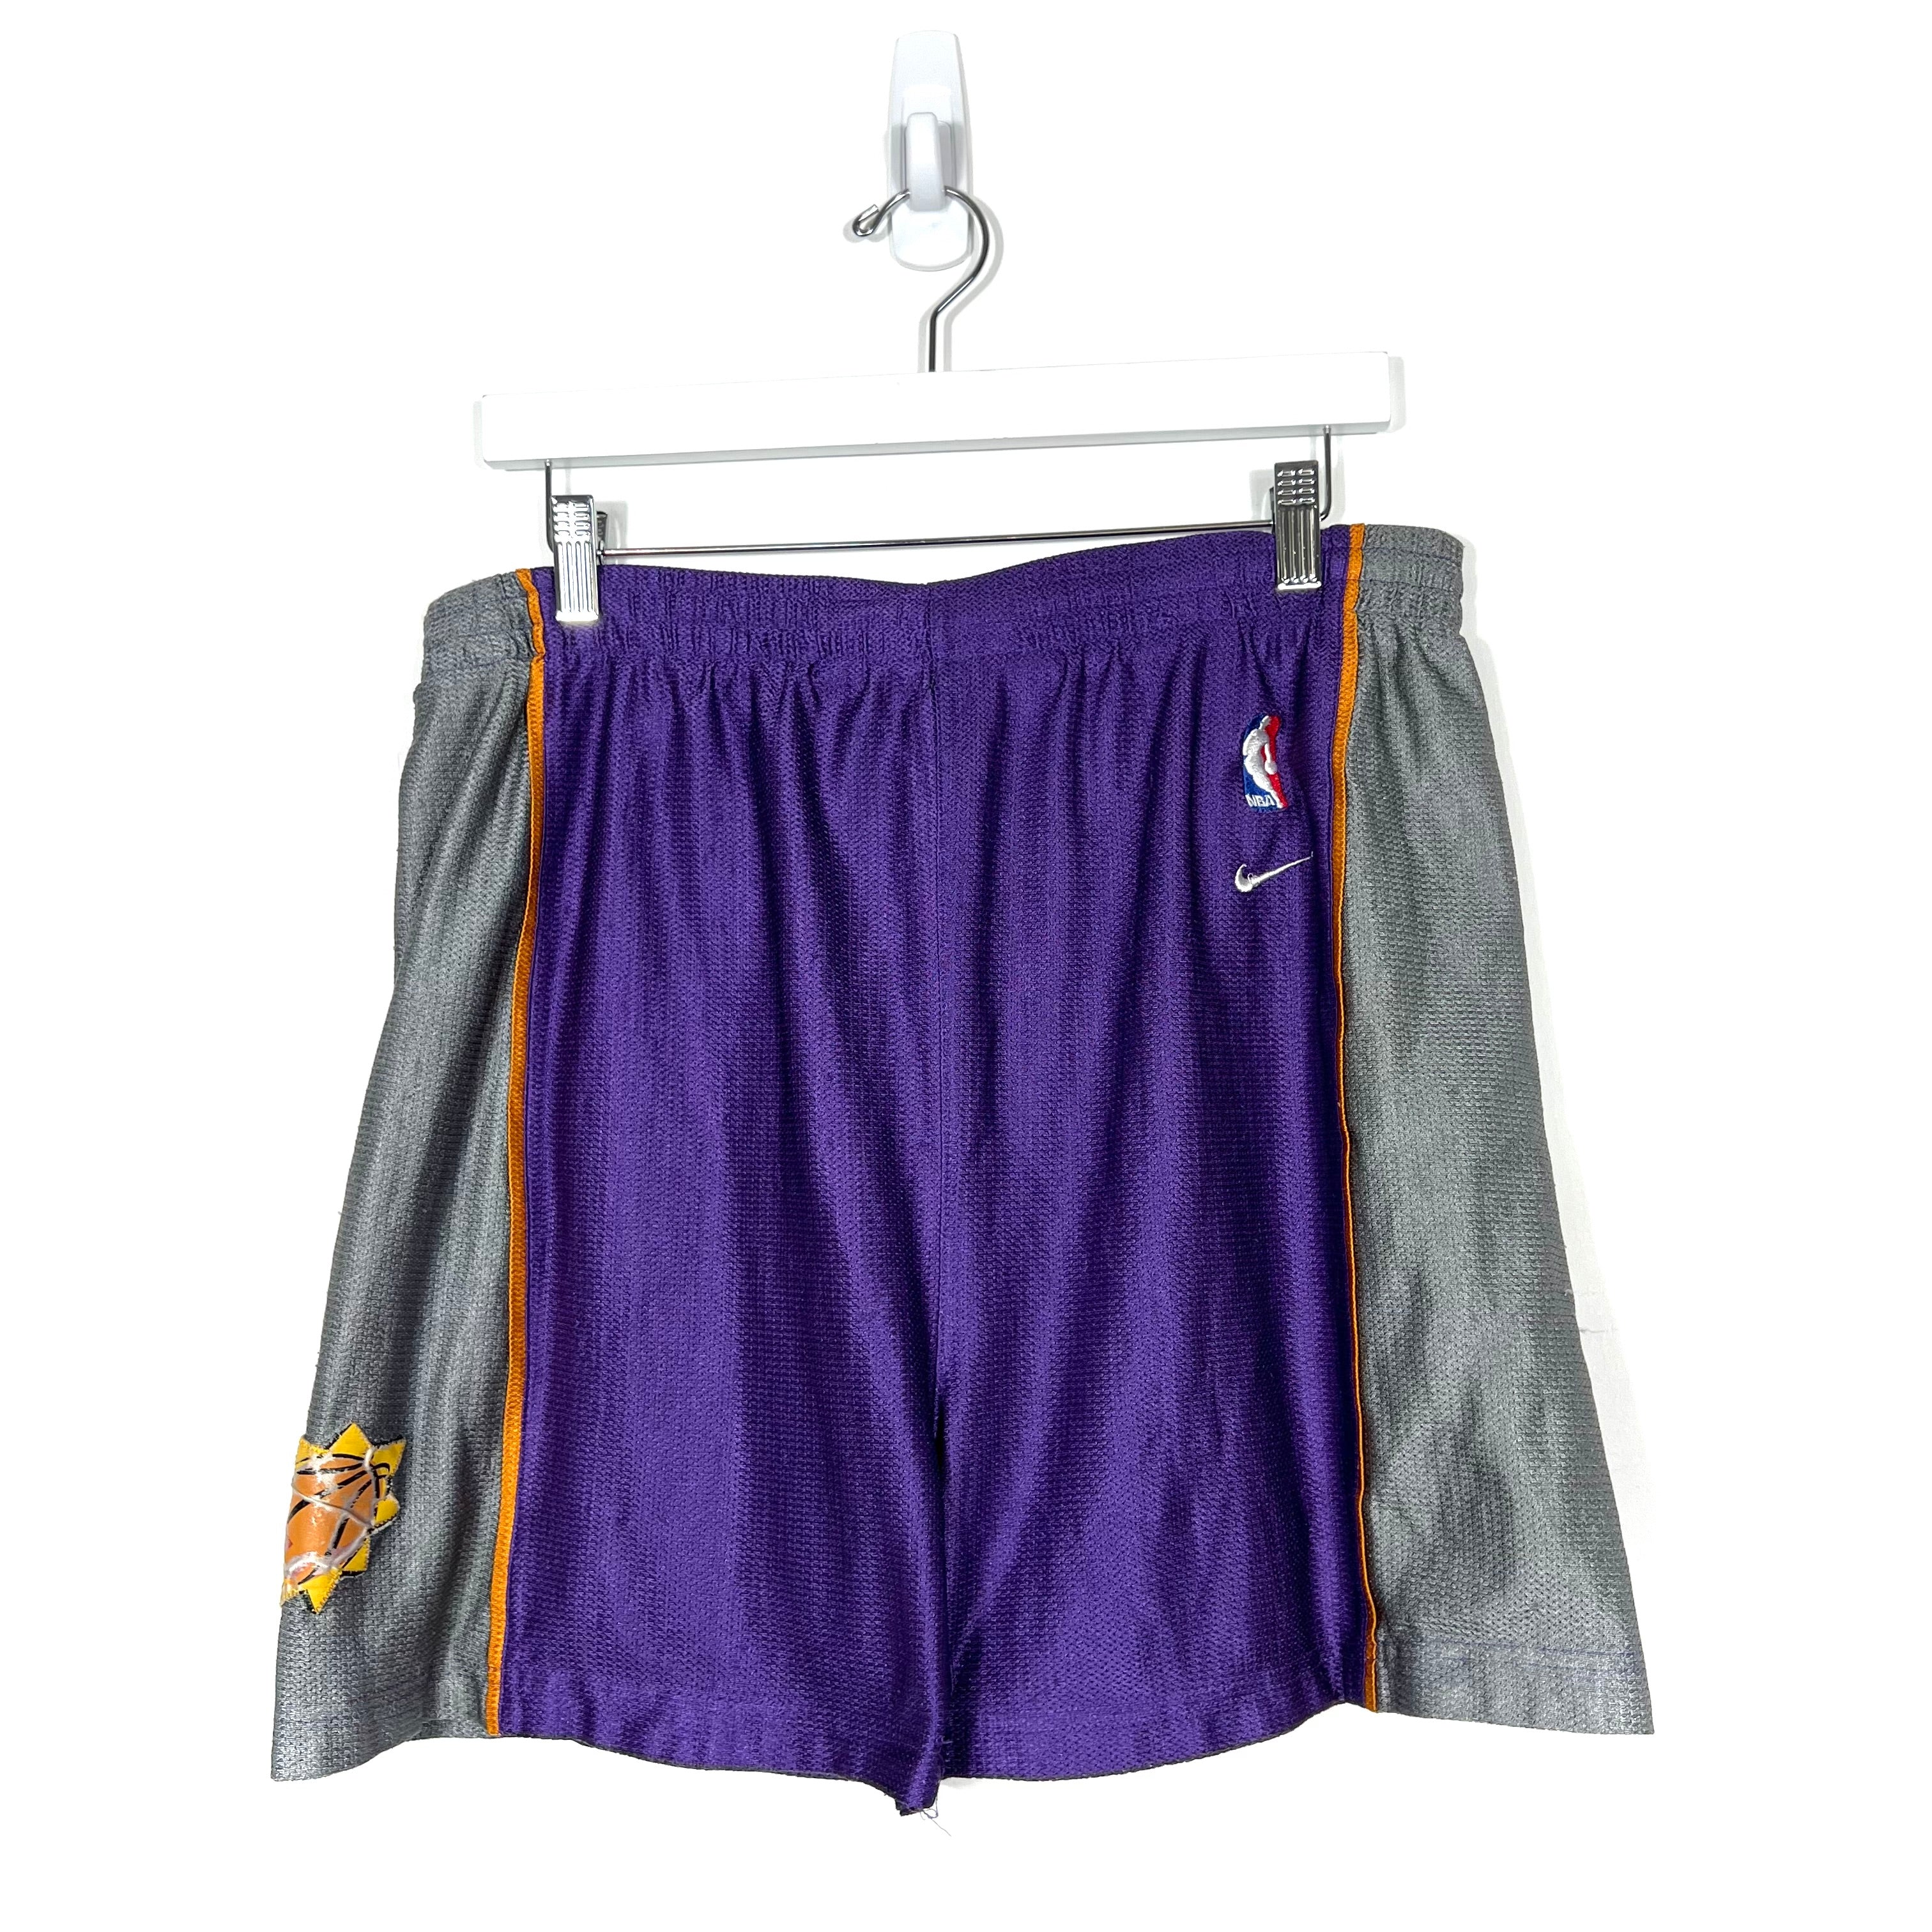 Vintage Nike NBA Phoenix Suns Shorts - Men's XL